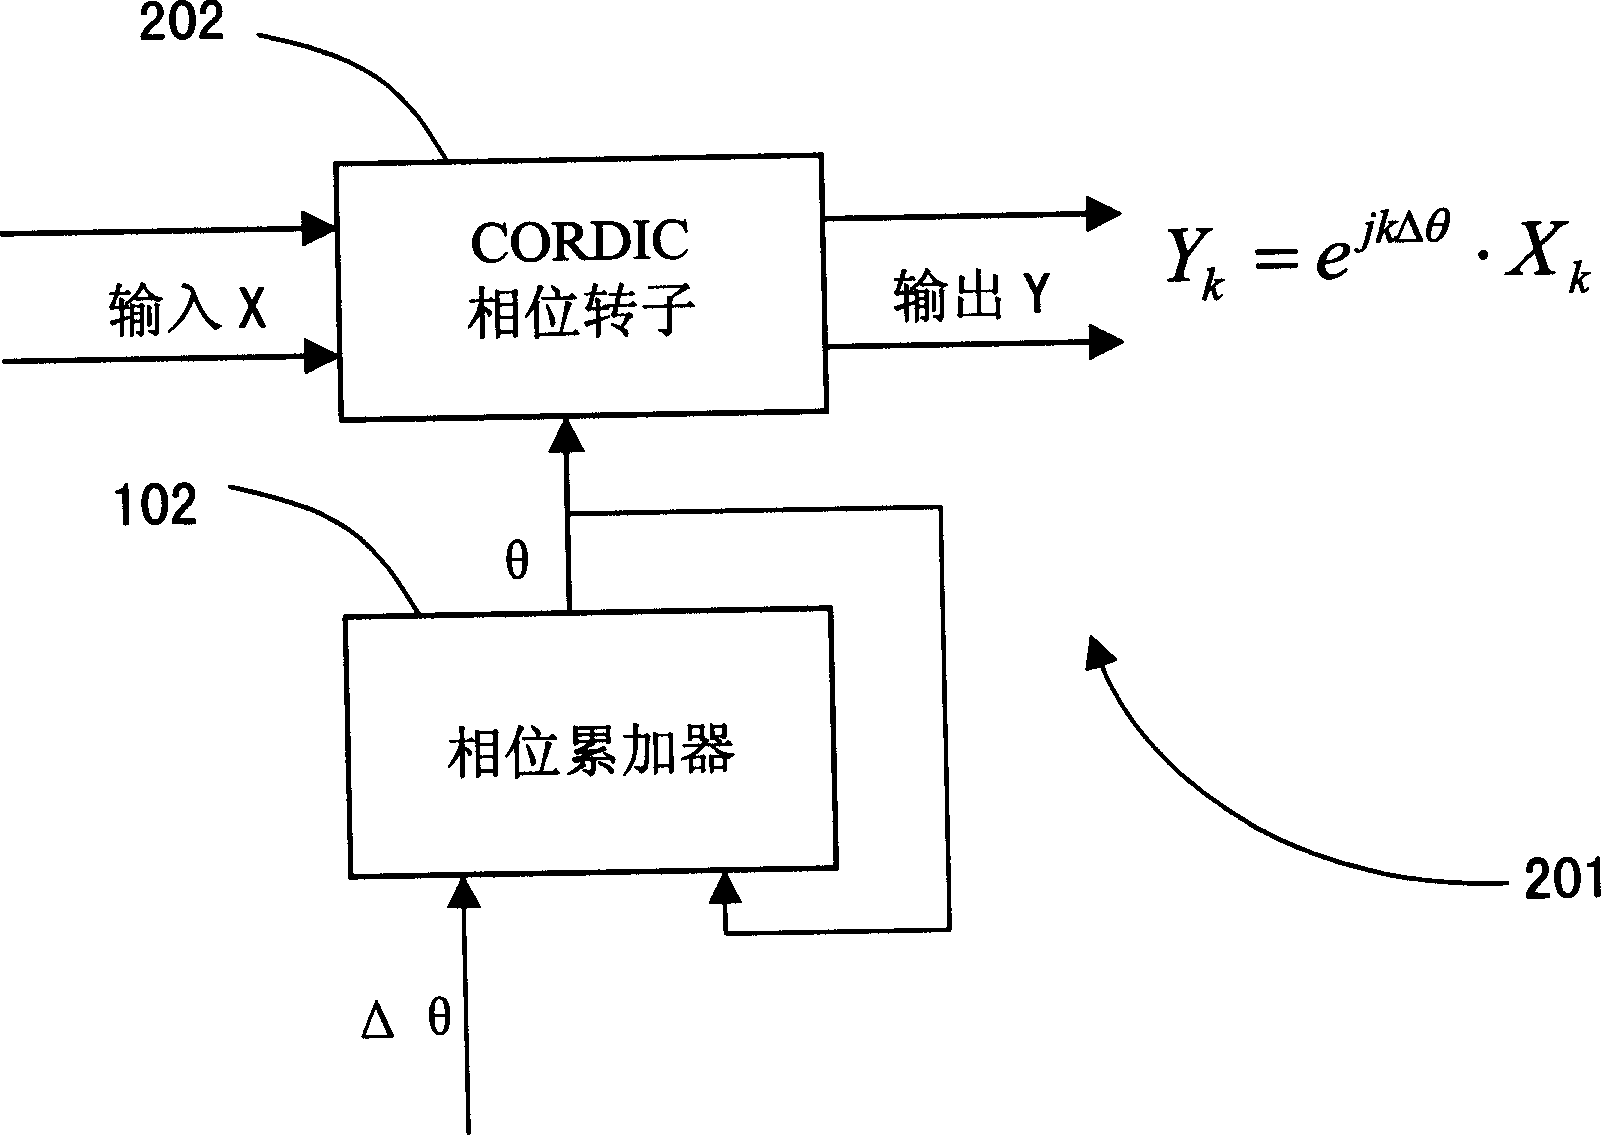 Frequency translator using a cordic phase rotator